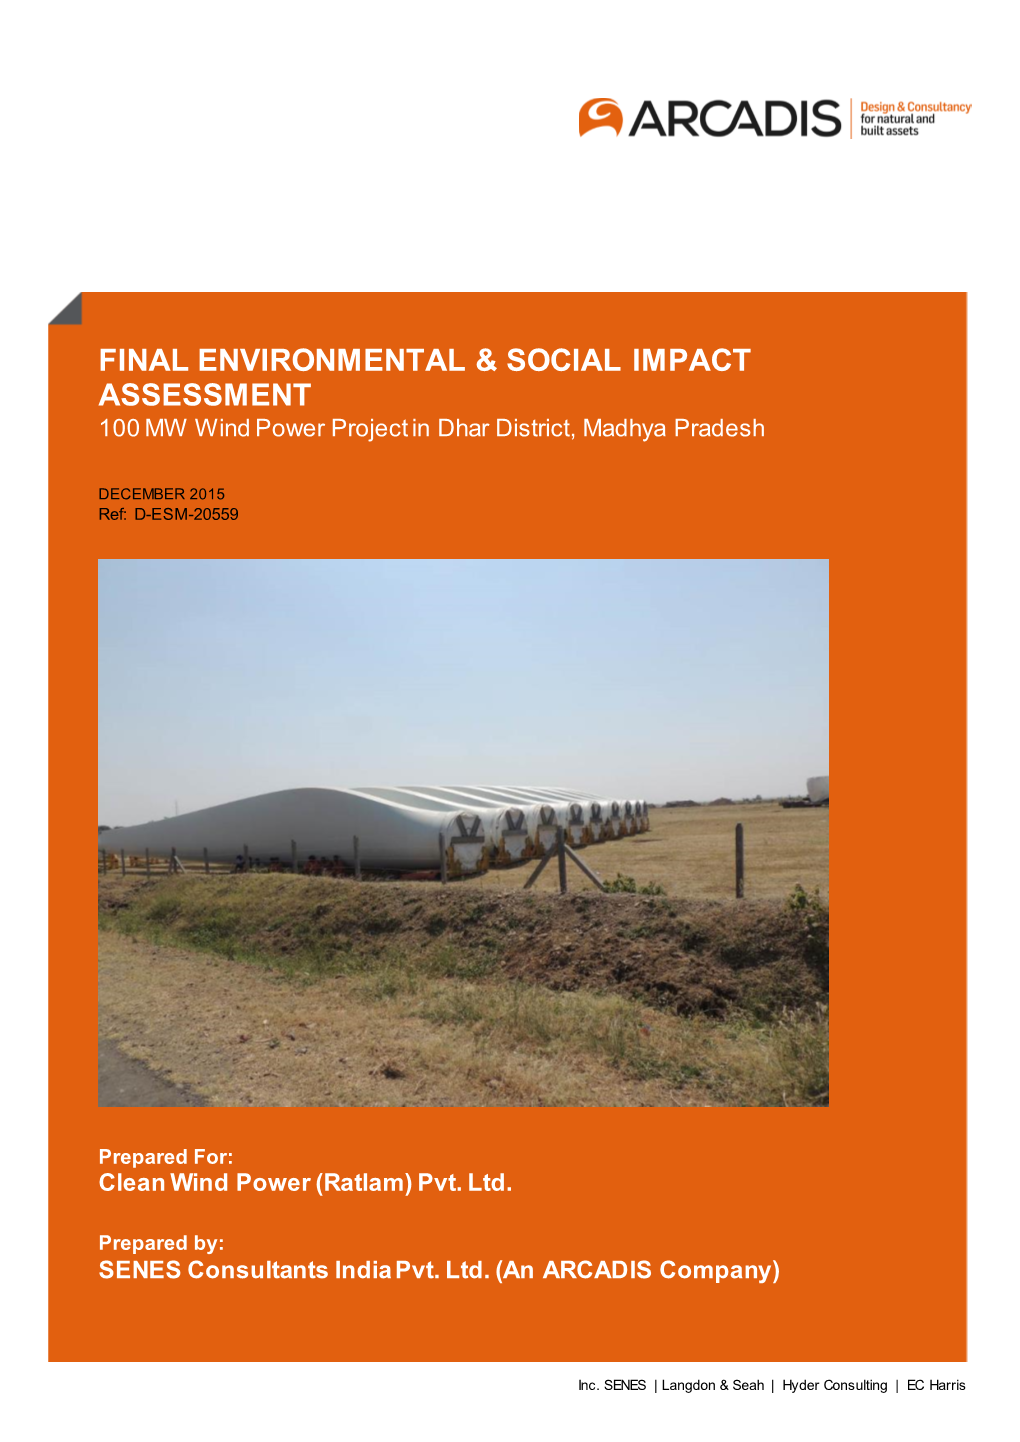 Final Environmental & Social Impact Assessment